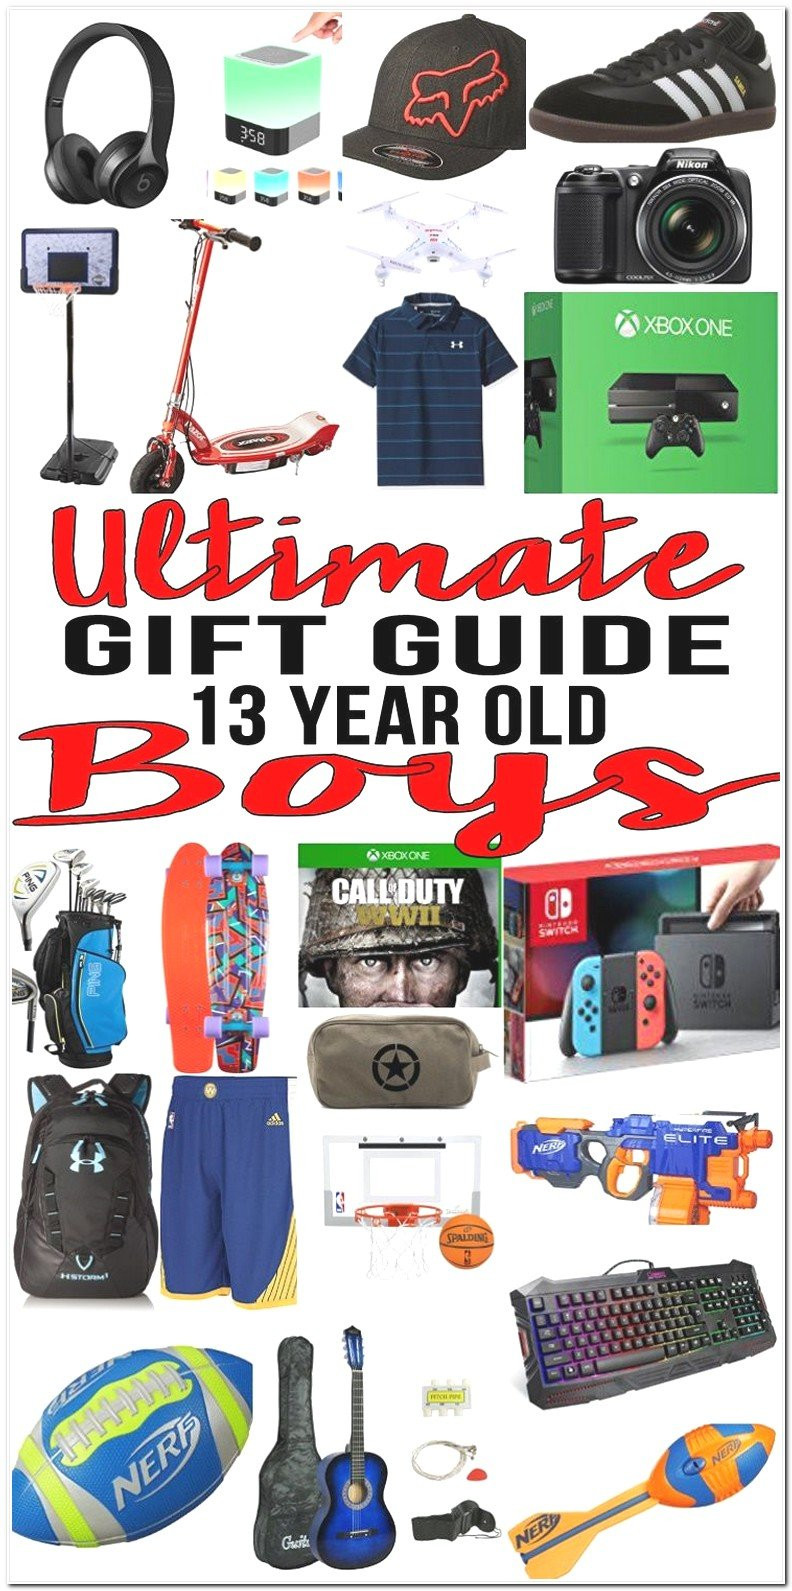 Gift Ideas 13 Year Old Boys
 Christmas List Ideas For 13 Year Olds Boy